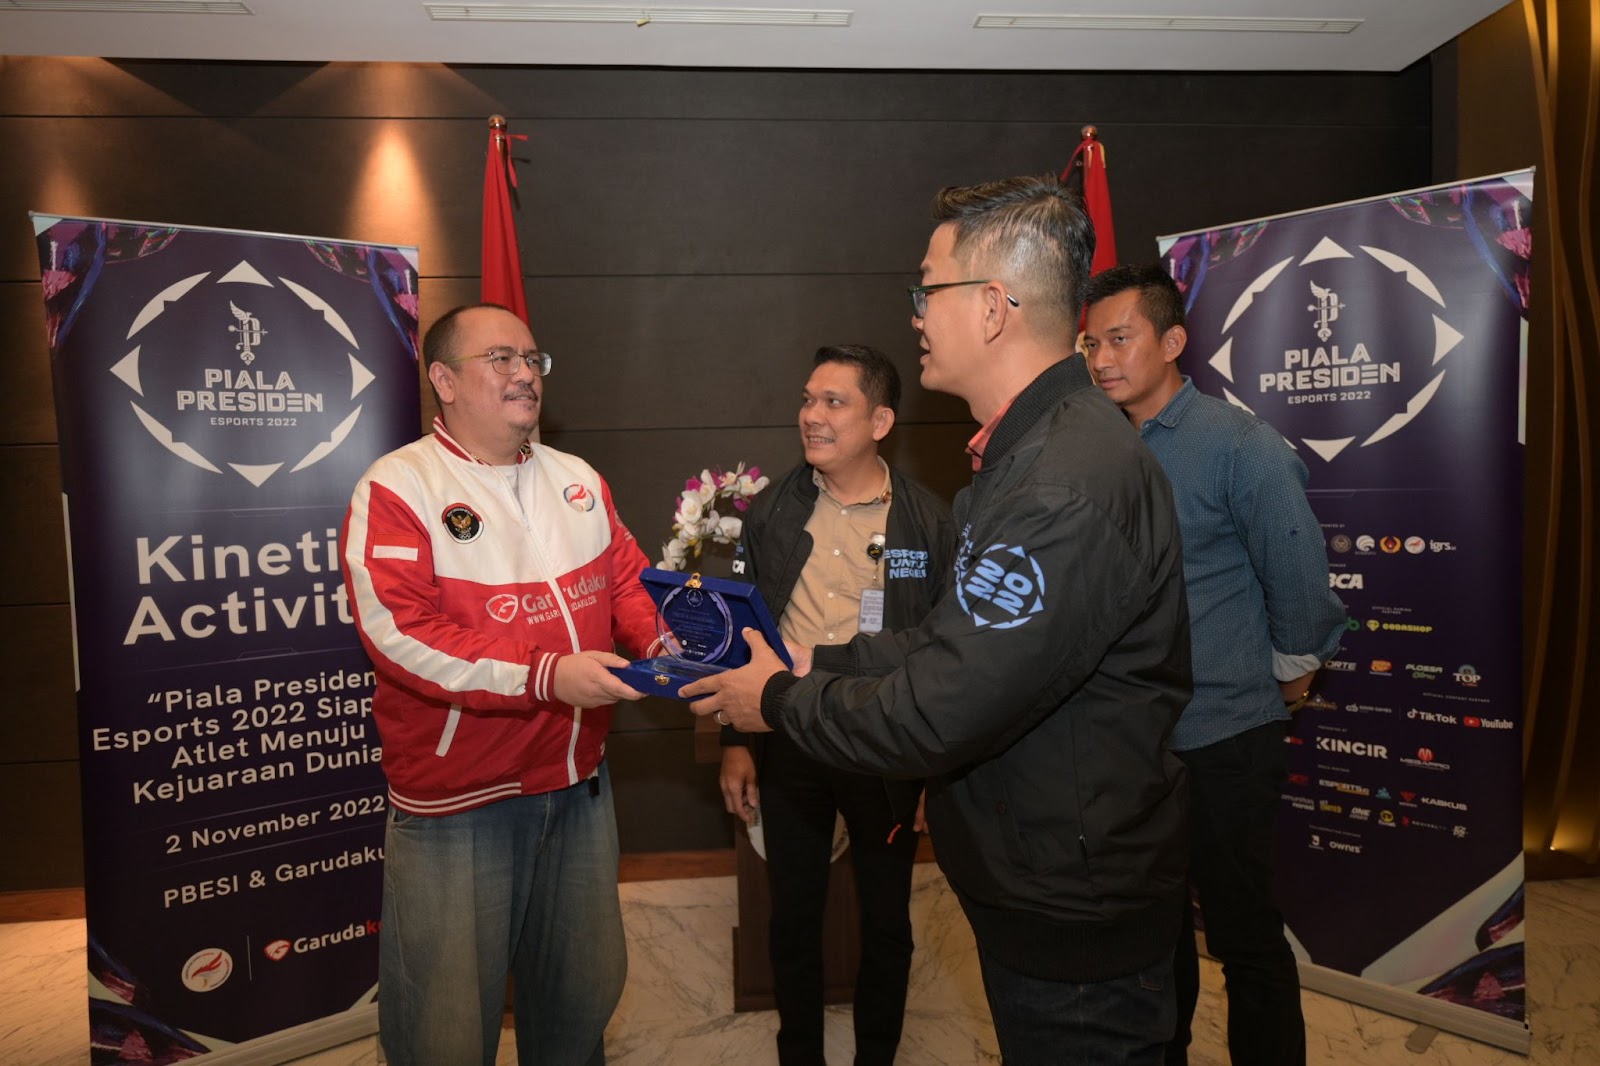 Piala Presiden Esports 2022 Jadikan Atlet Indonesia Siap Kejuaraan Tingkat Dunia 